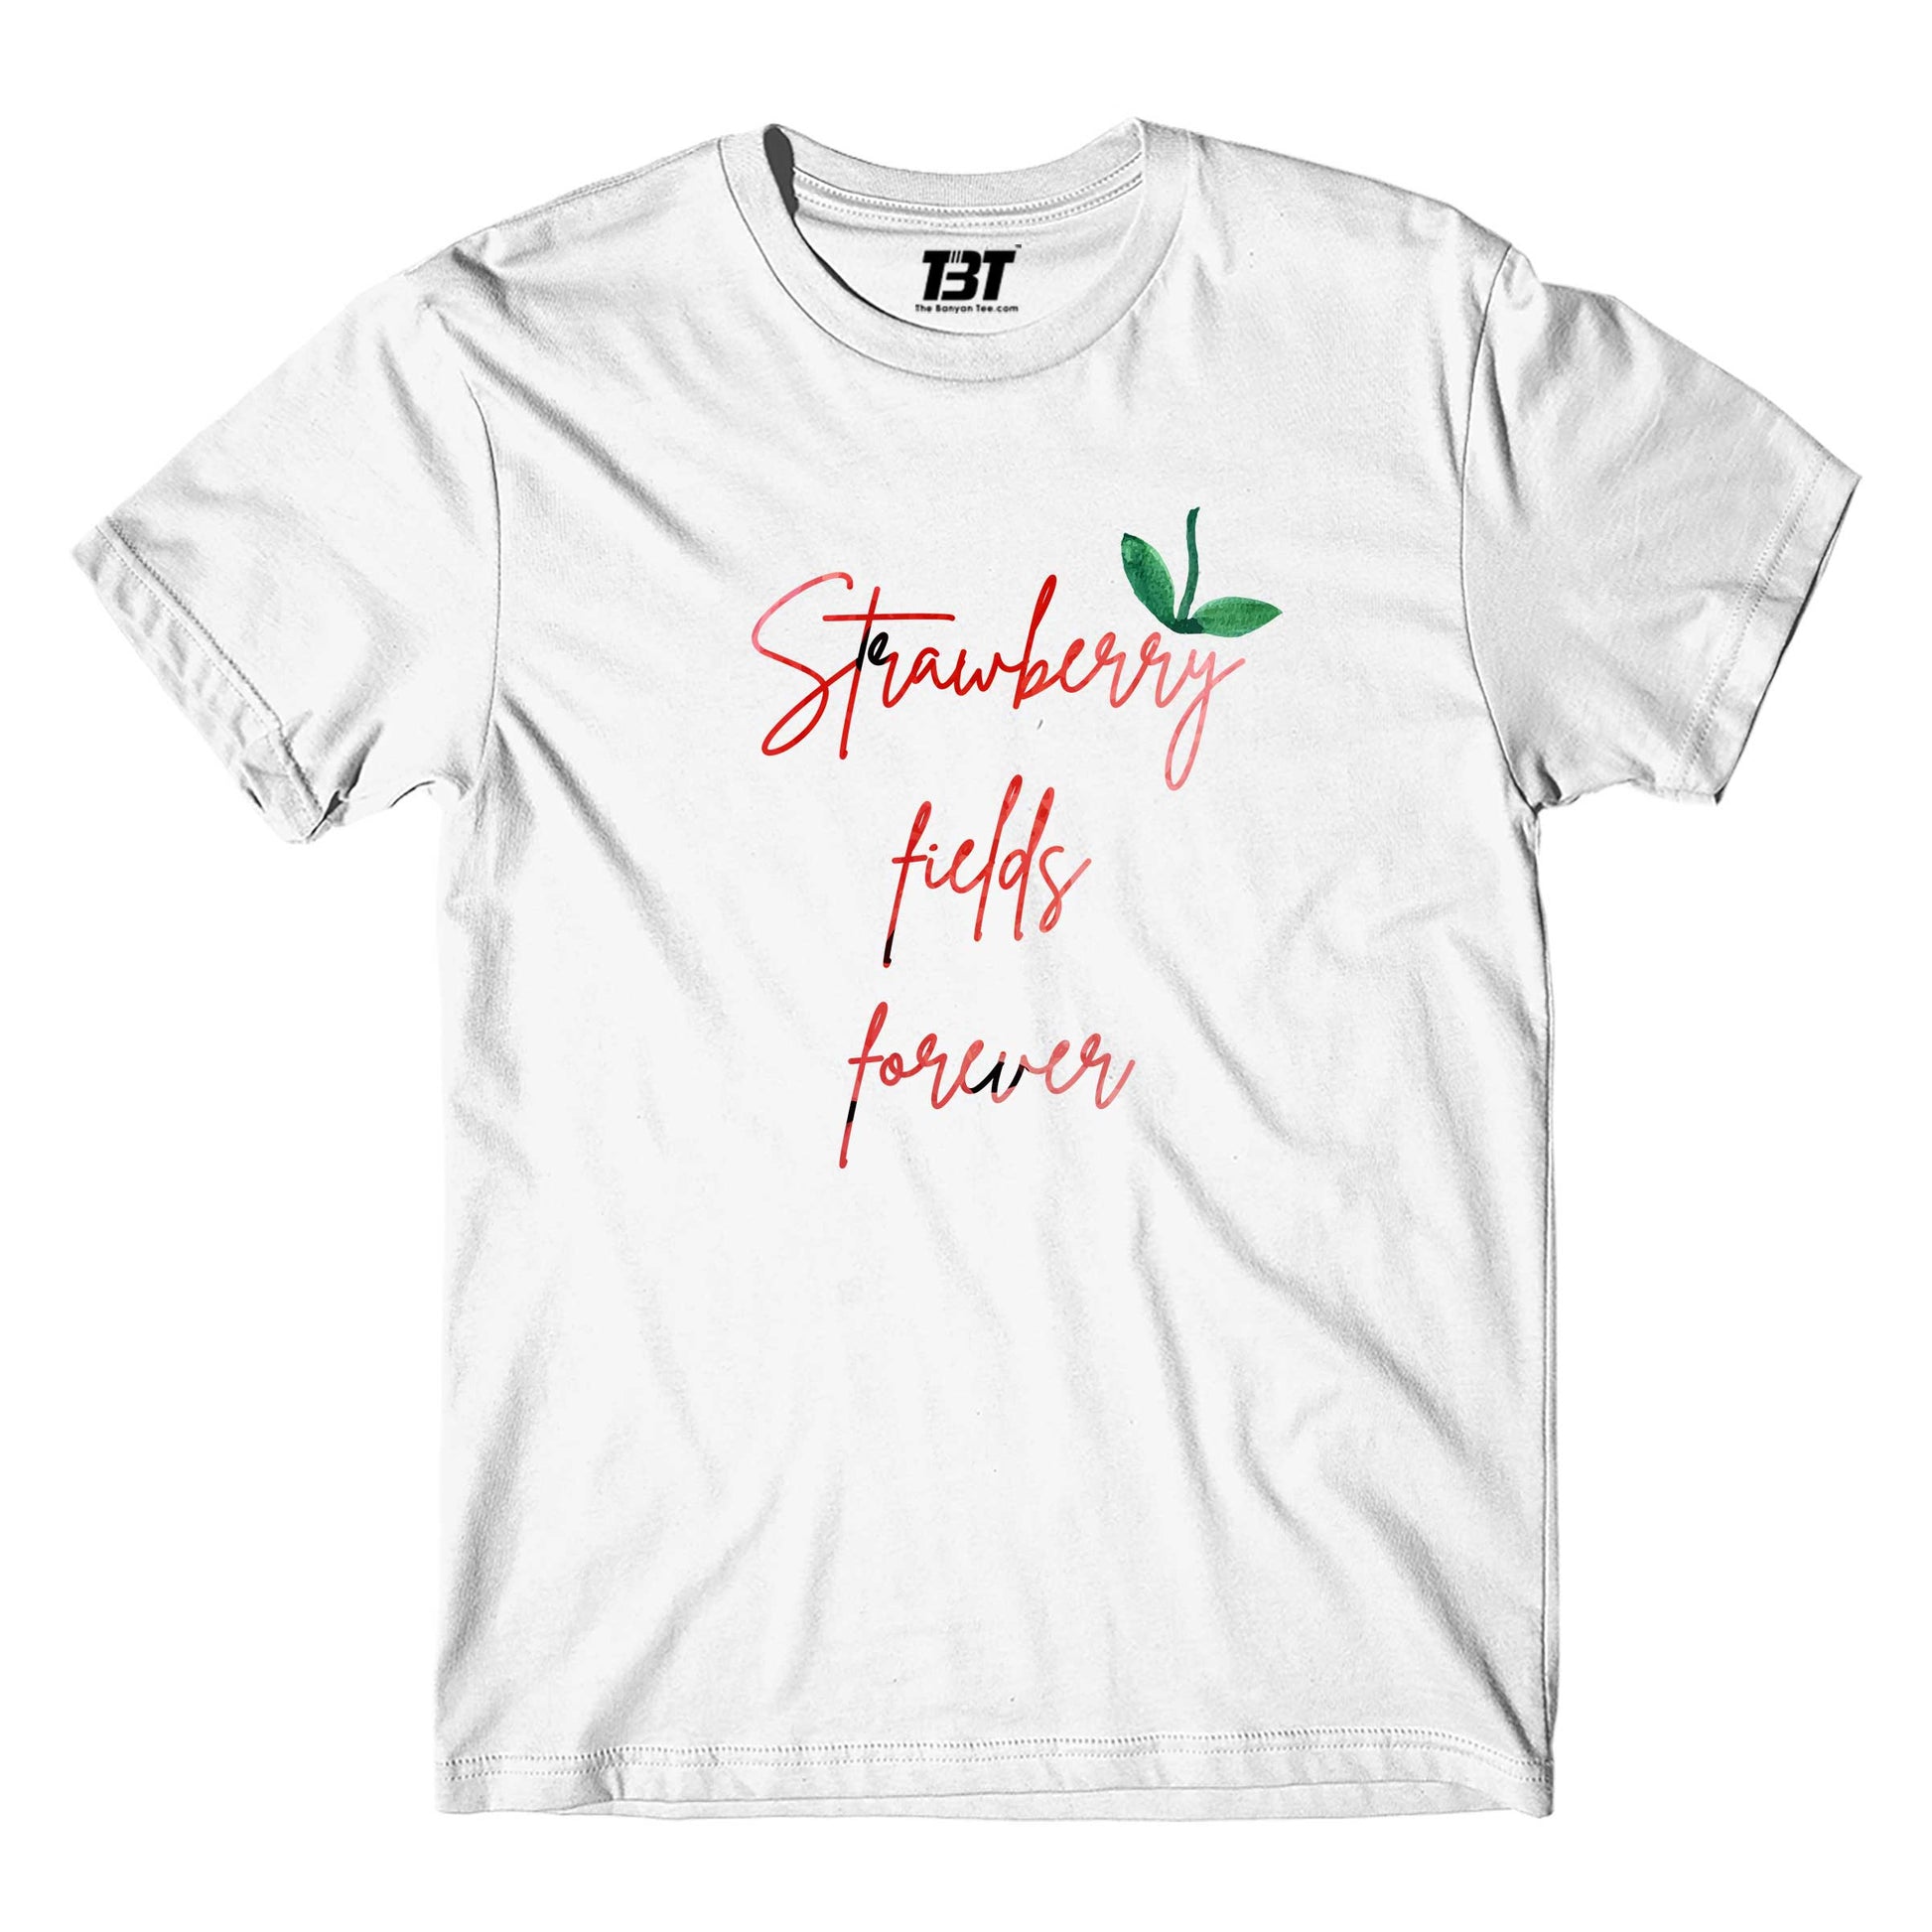 The Beatles T-shirt - Strawberry Fields Forever T-shirt The Banyan Tee TBT shirt for men women boys designer stylish online cotton india